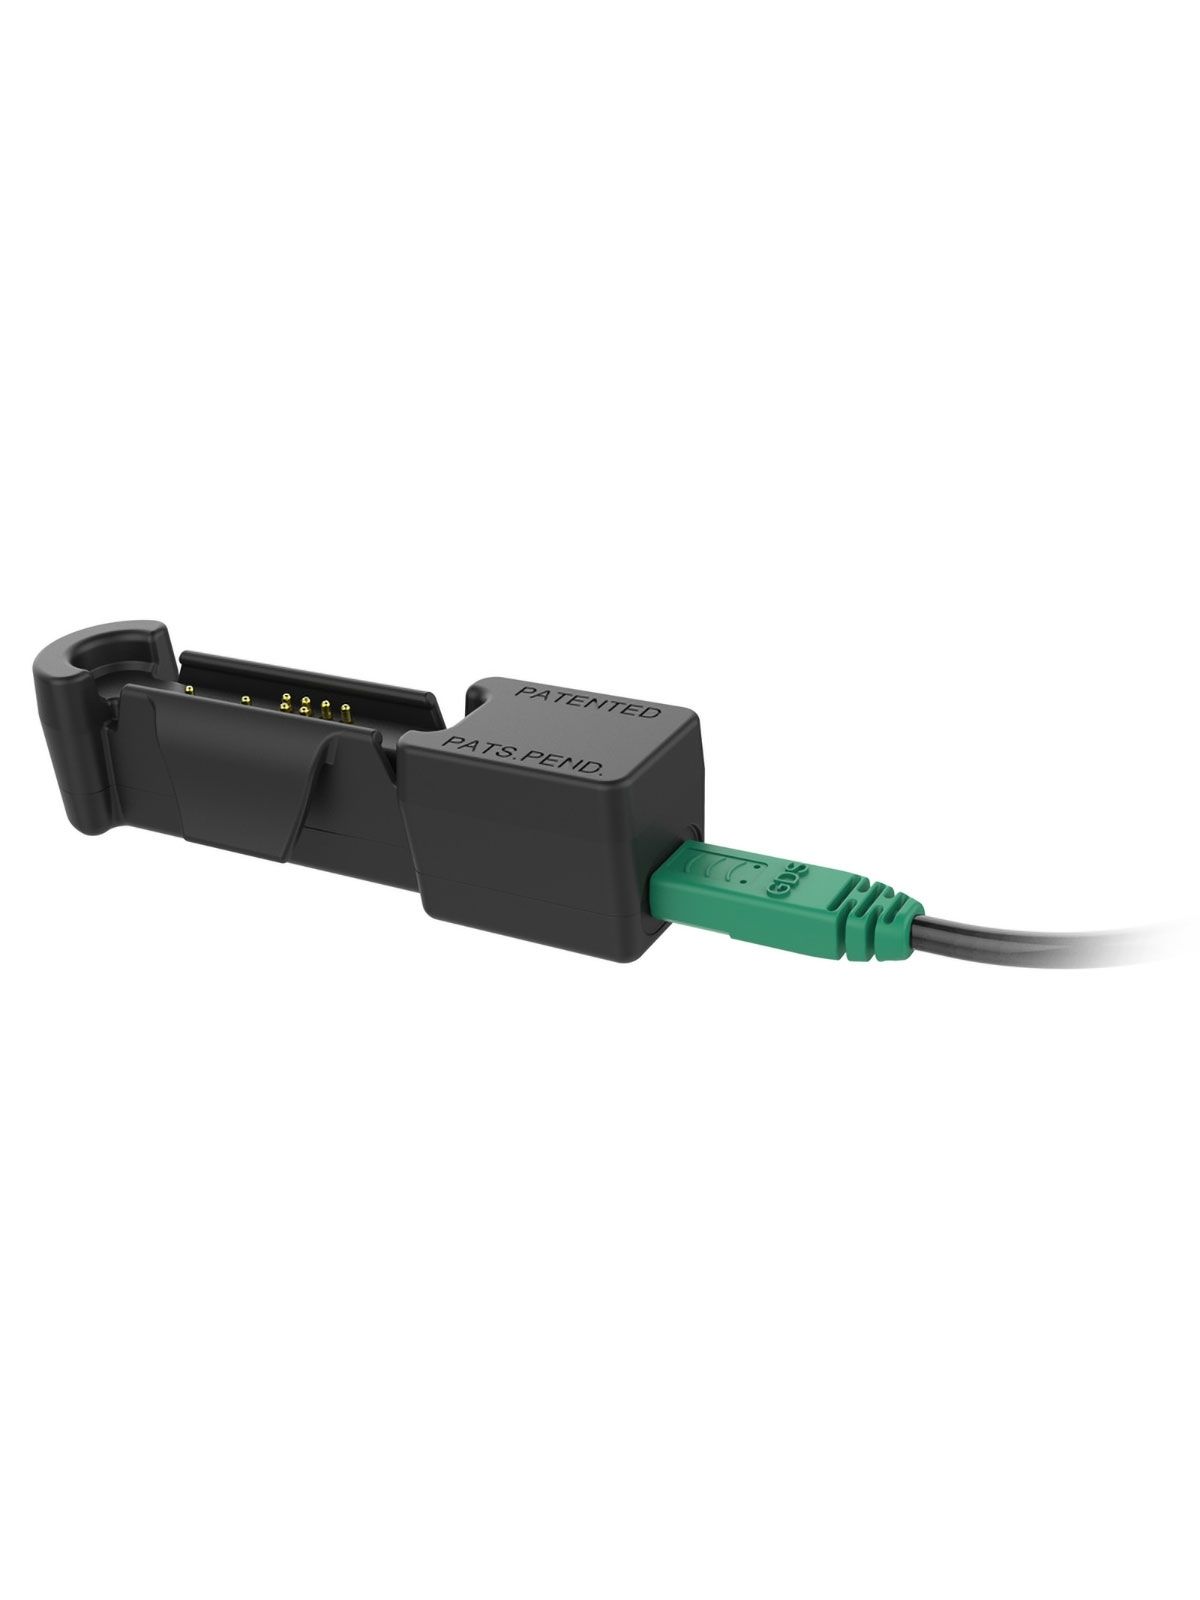 RAM Mounts GDS Snap-Con Ladesockel für IntelliSkin-Lade-/Schutzhüllen - USB-C, inkl. Kabel